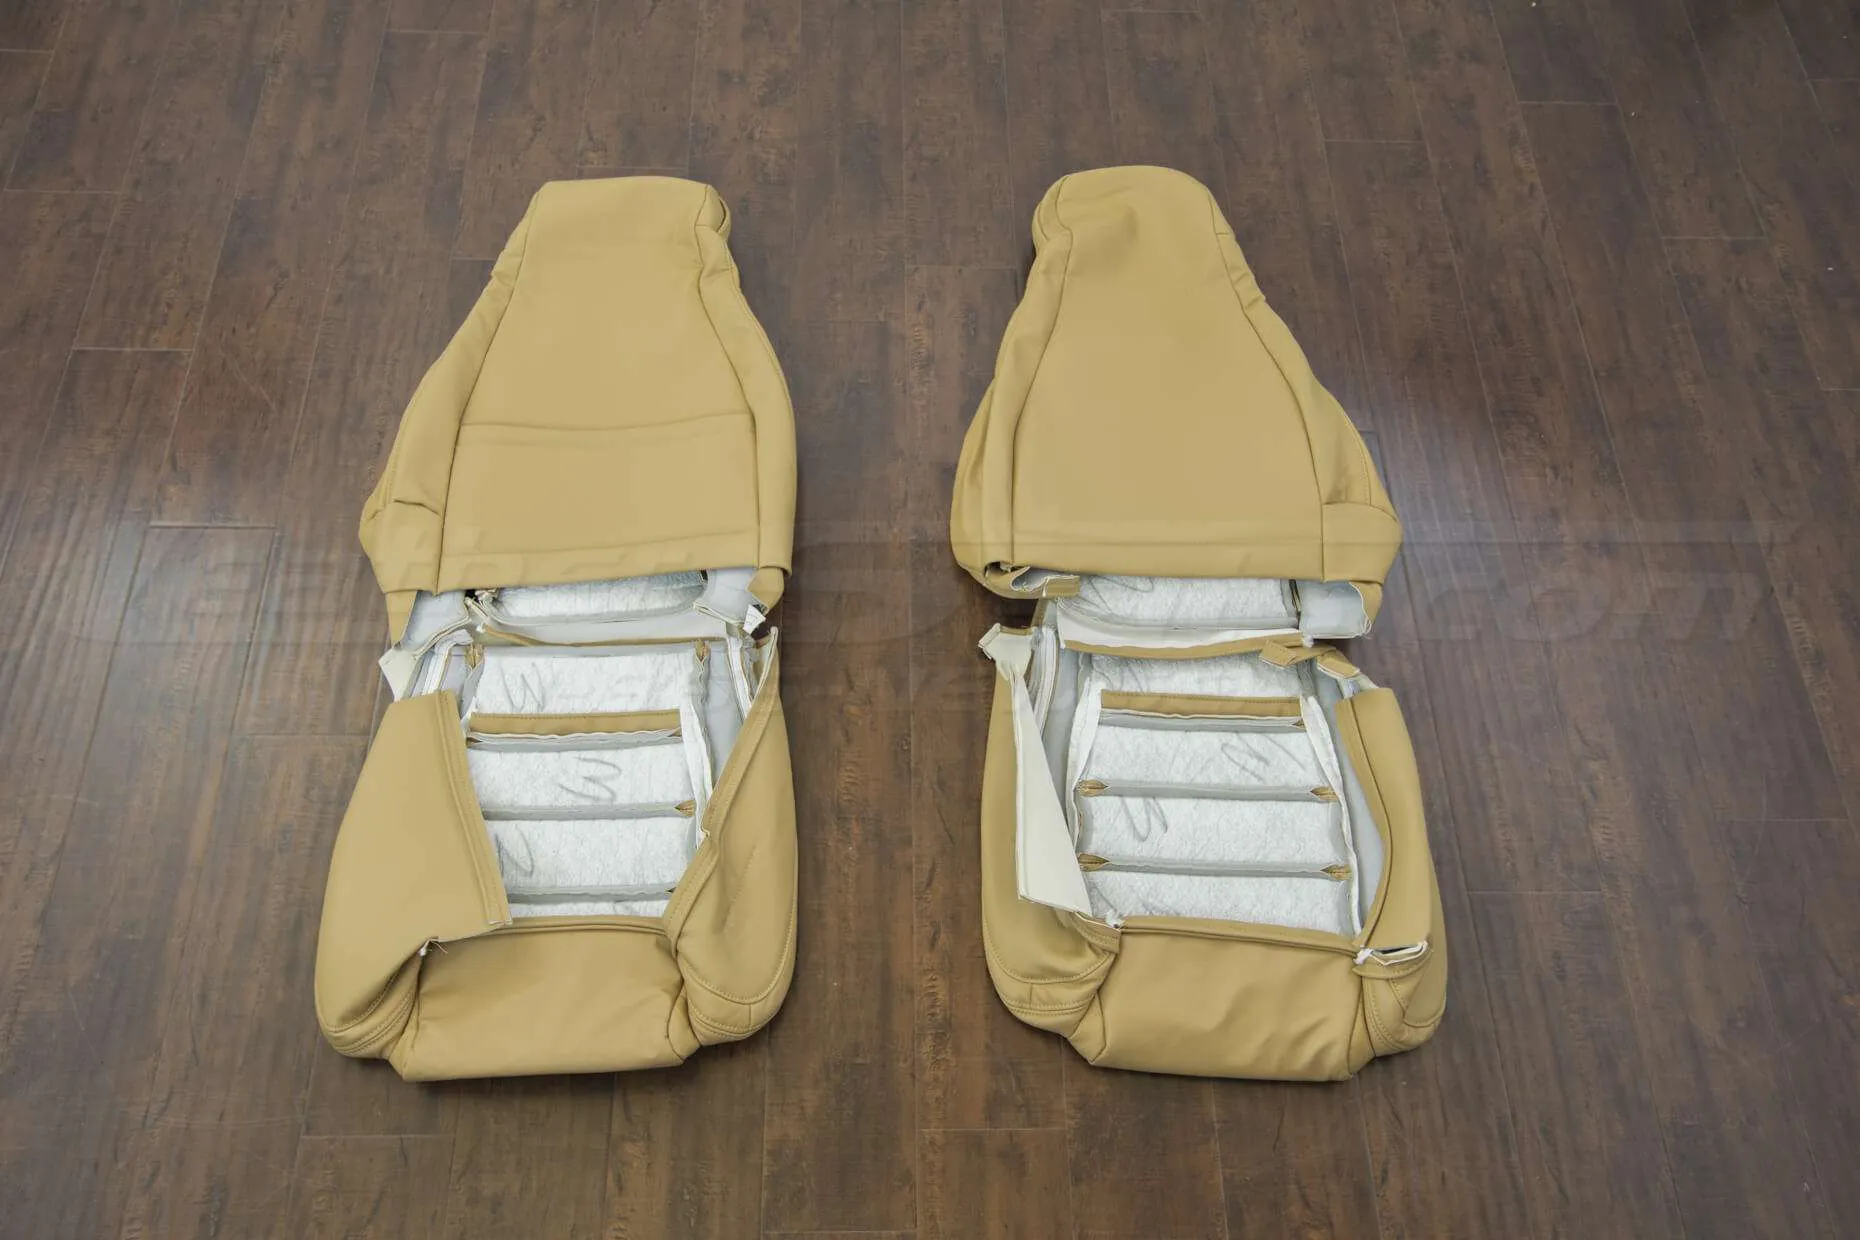 1990-1995 Mazda Miata Upholstery Kit - Tan - Back of front seats